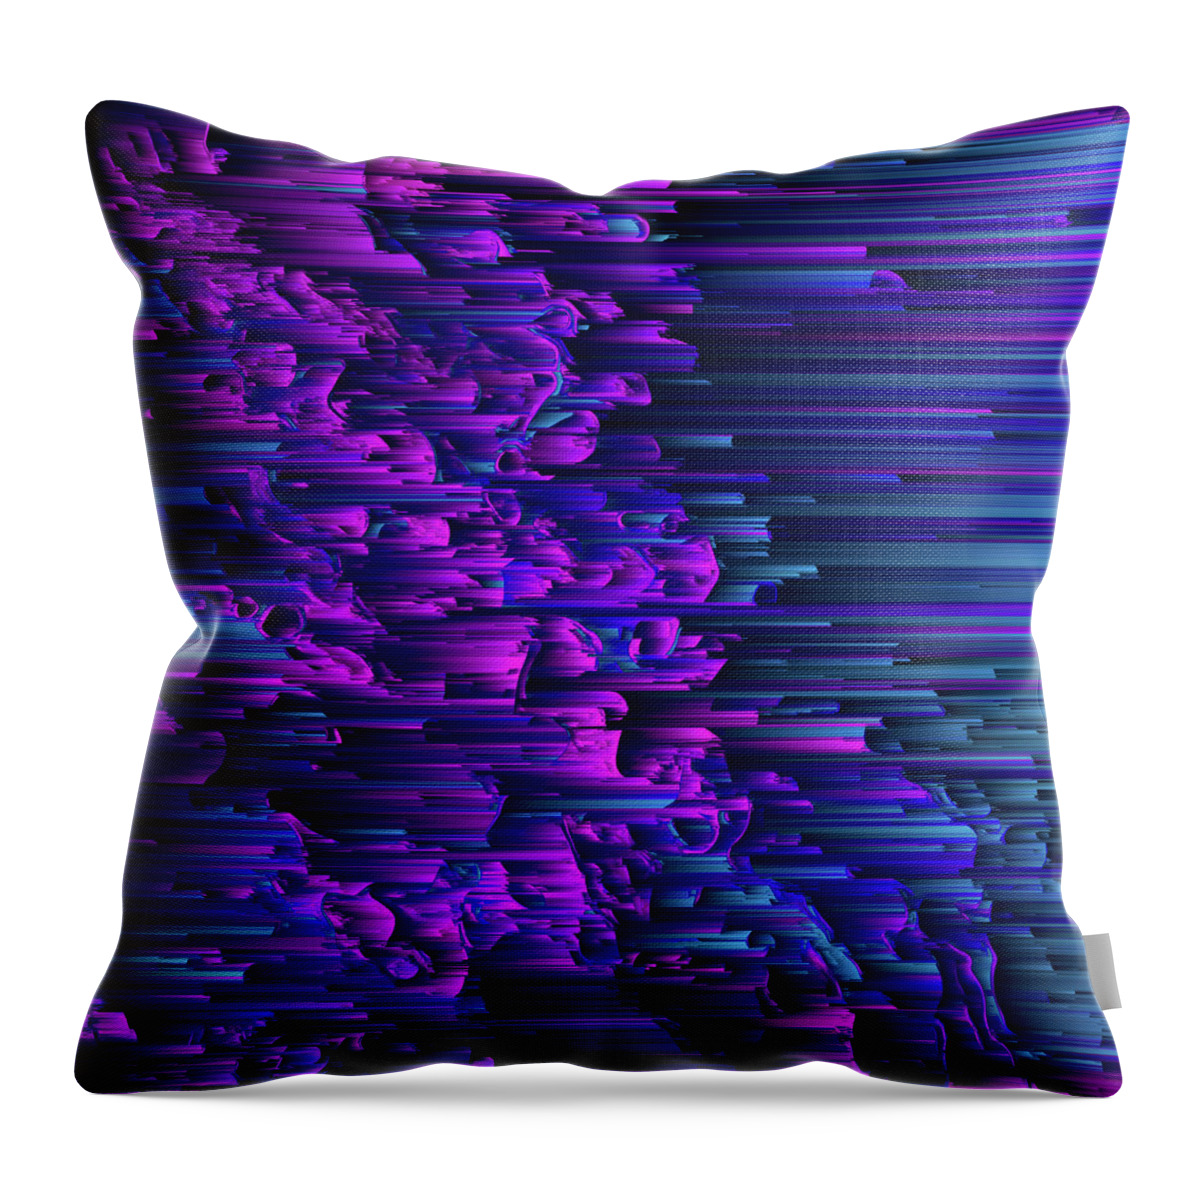 Glitch Throw Pillow featuring the digital art Purple Haze by Jennifer Walsh